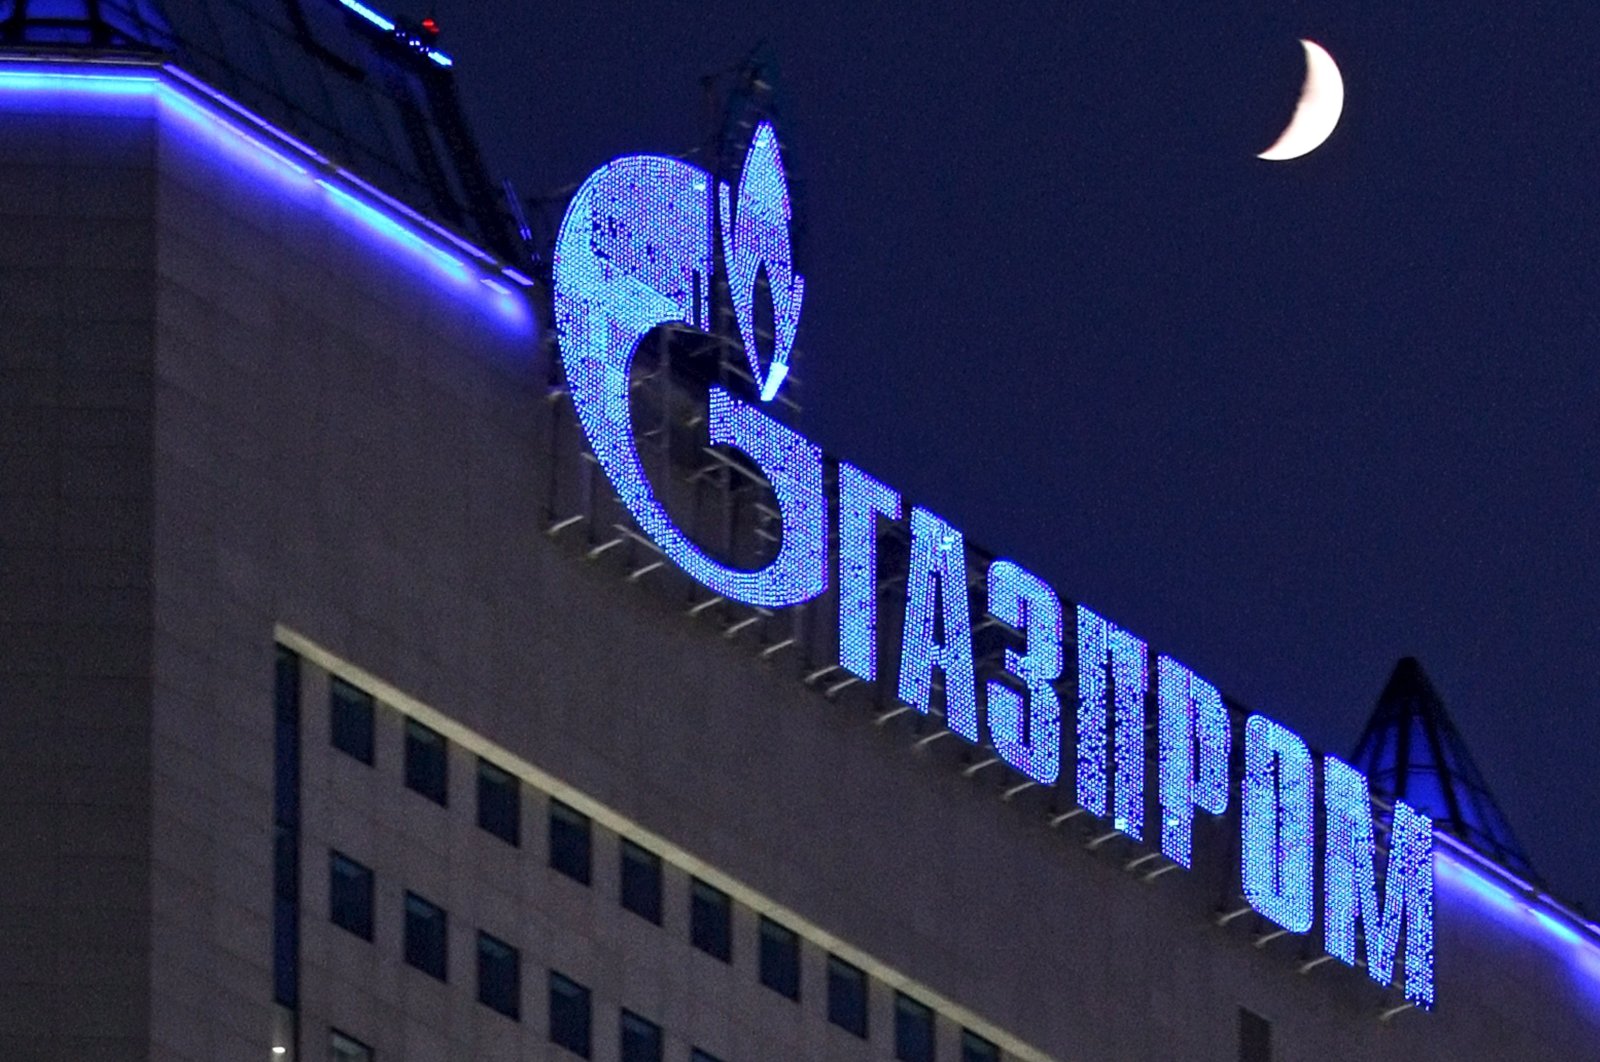 The logo of Russian gas company Gazprom illuminated on Gazprom headquarters in Moscow, Russia, Jan 2, 2009. (EPA Photo)